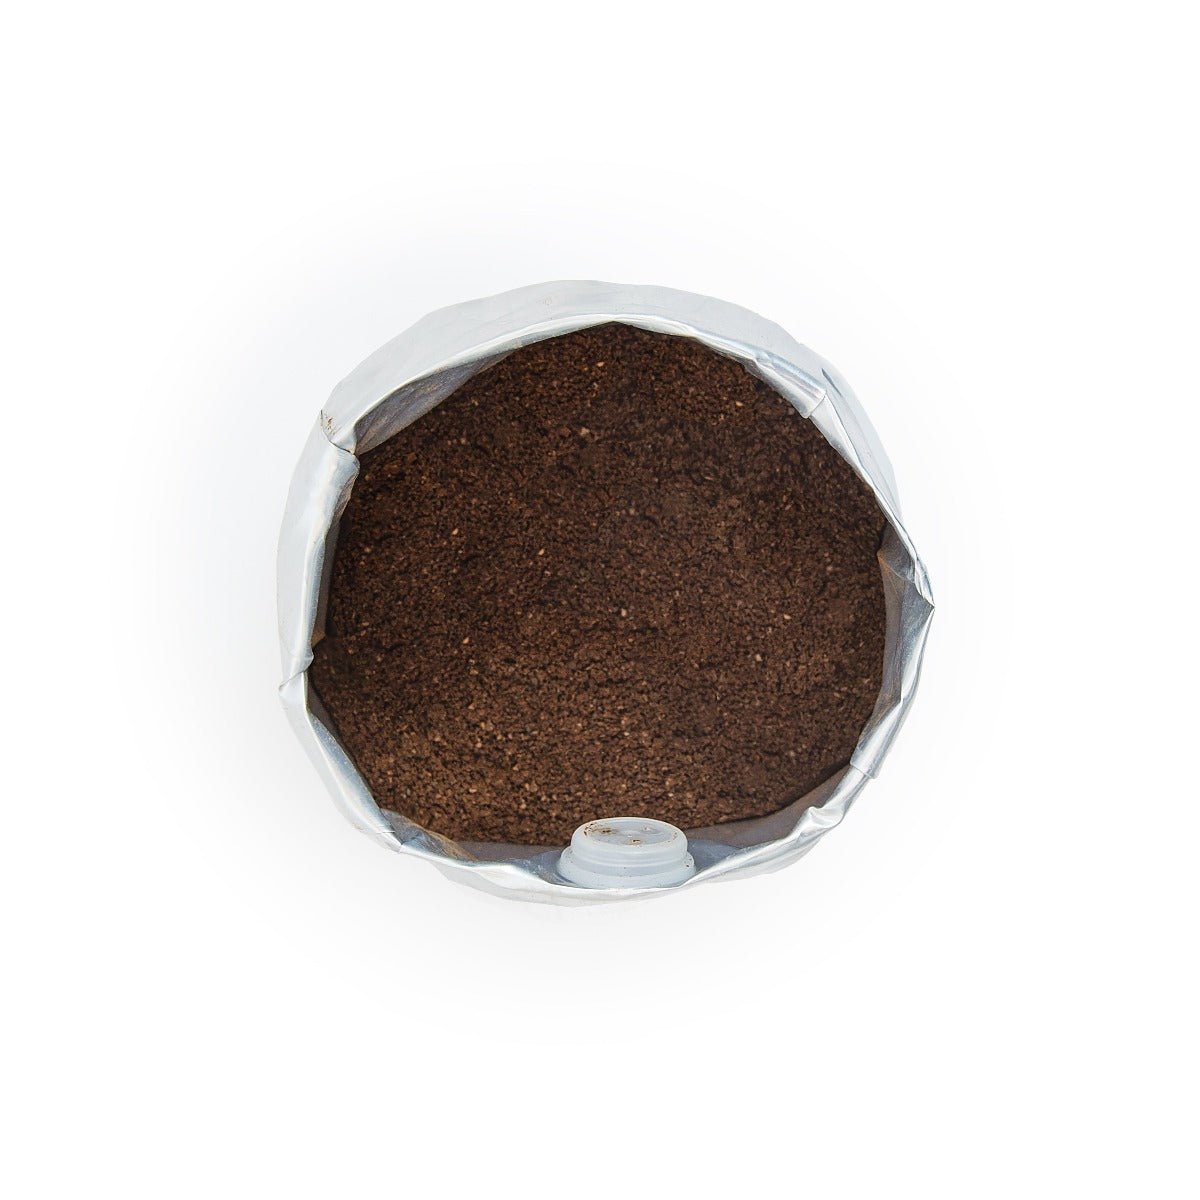 MEAZA - Ground coffee - MOGI - The Luxury Italian Coffee